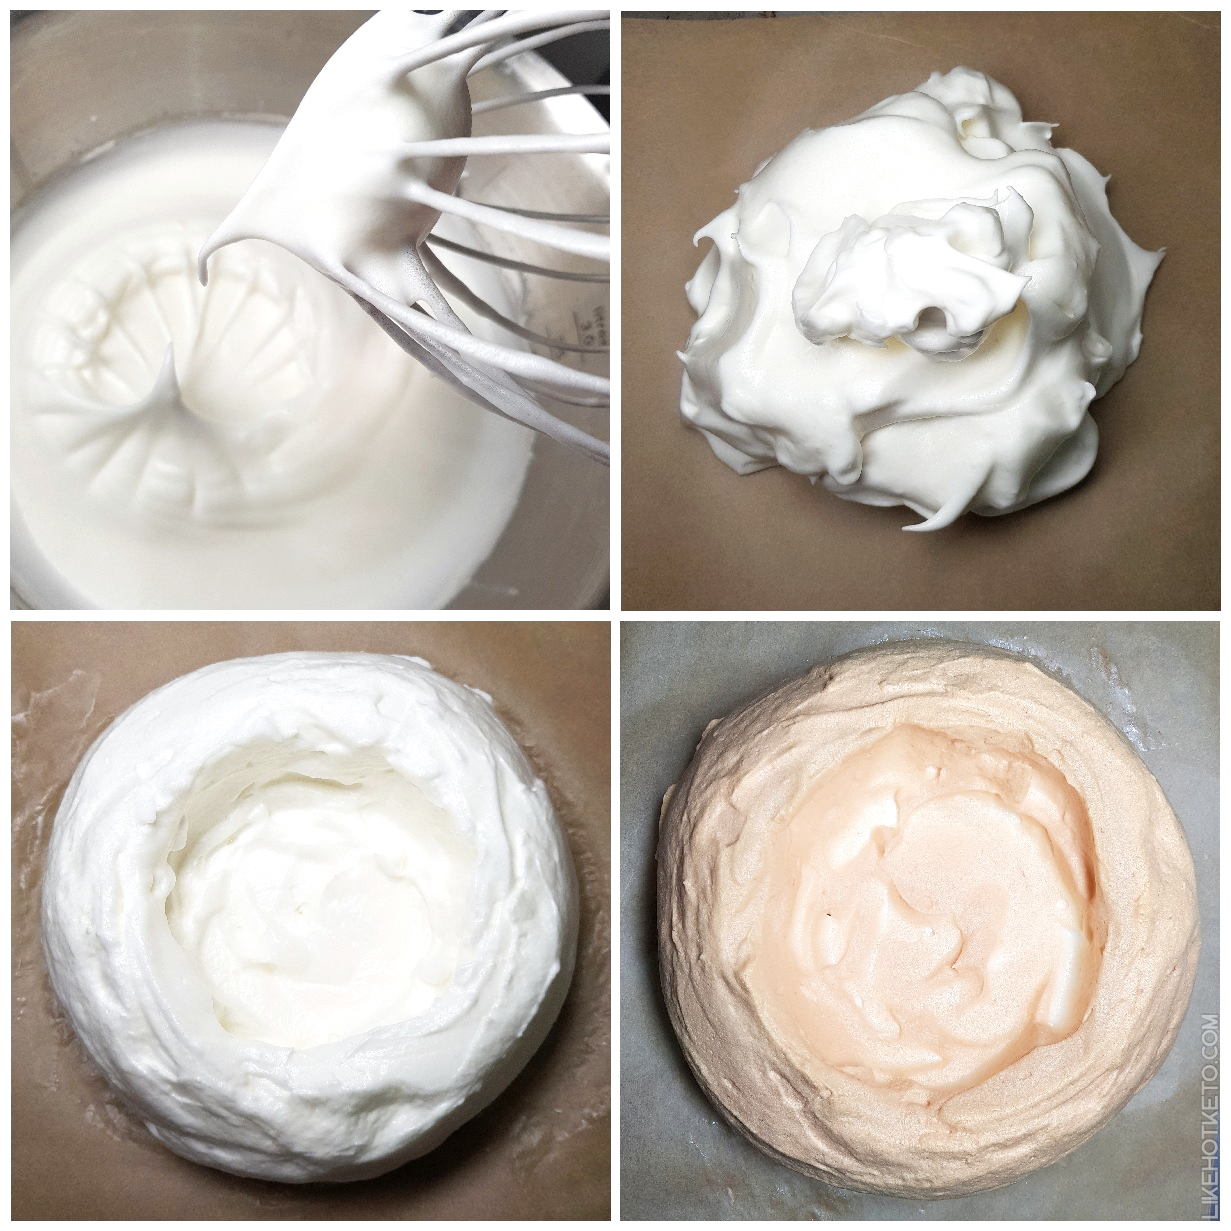 How to prepare the meringue and shape the pavlova.